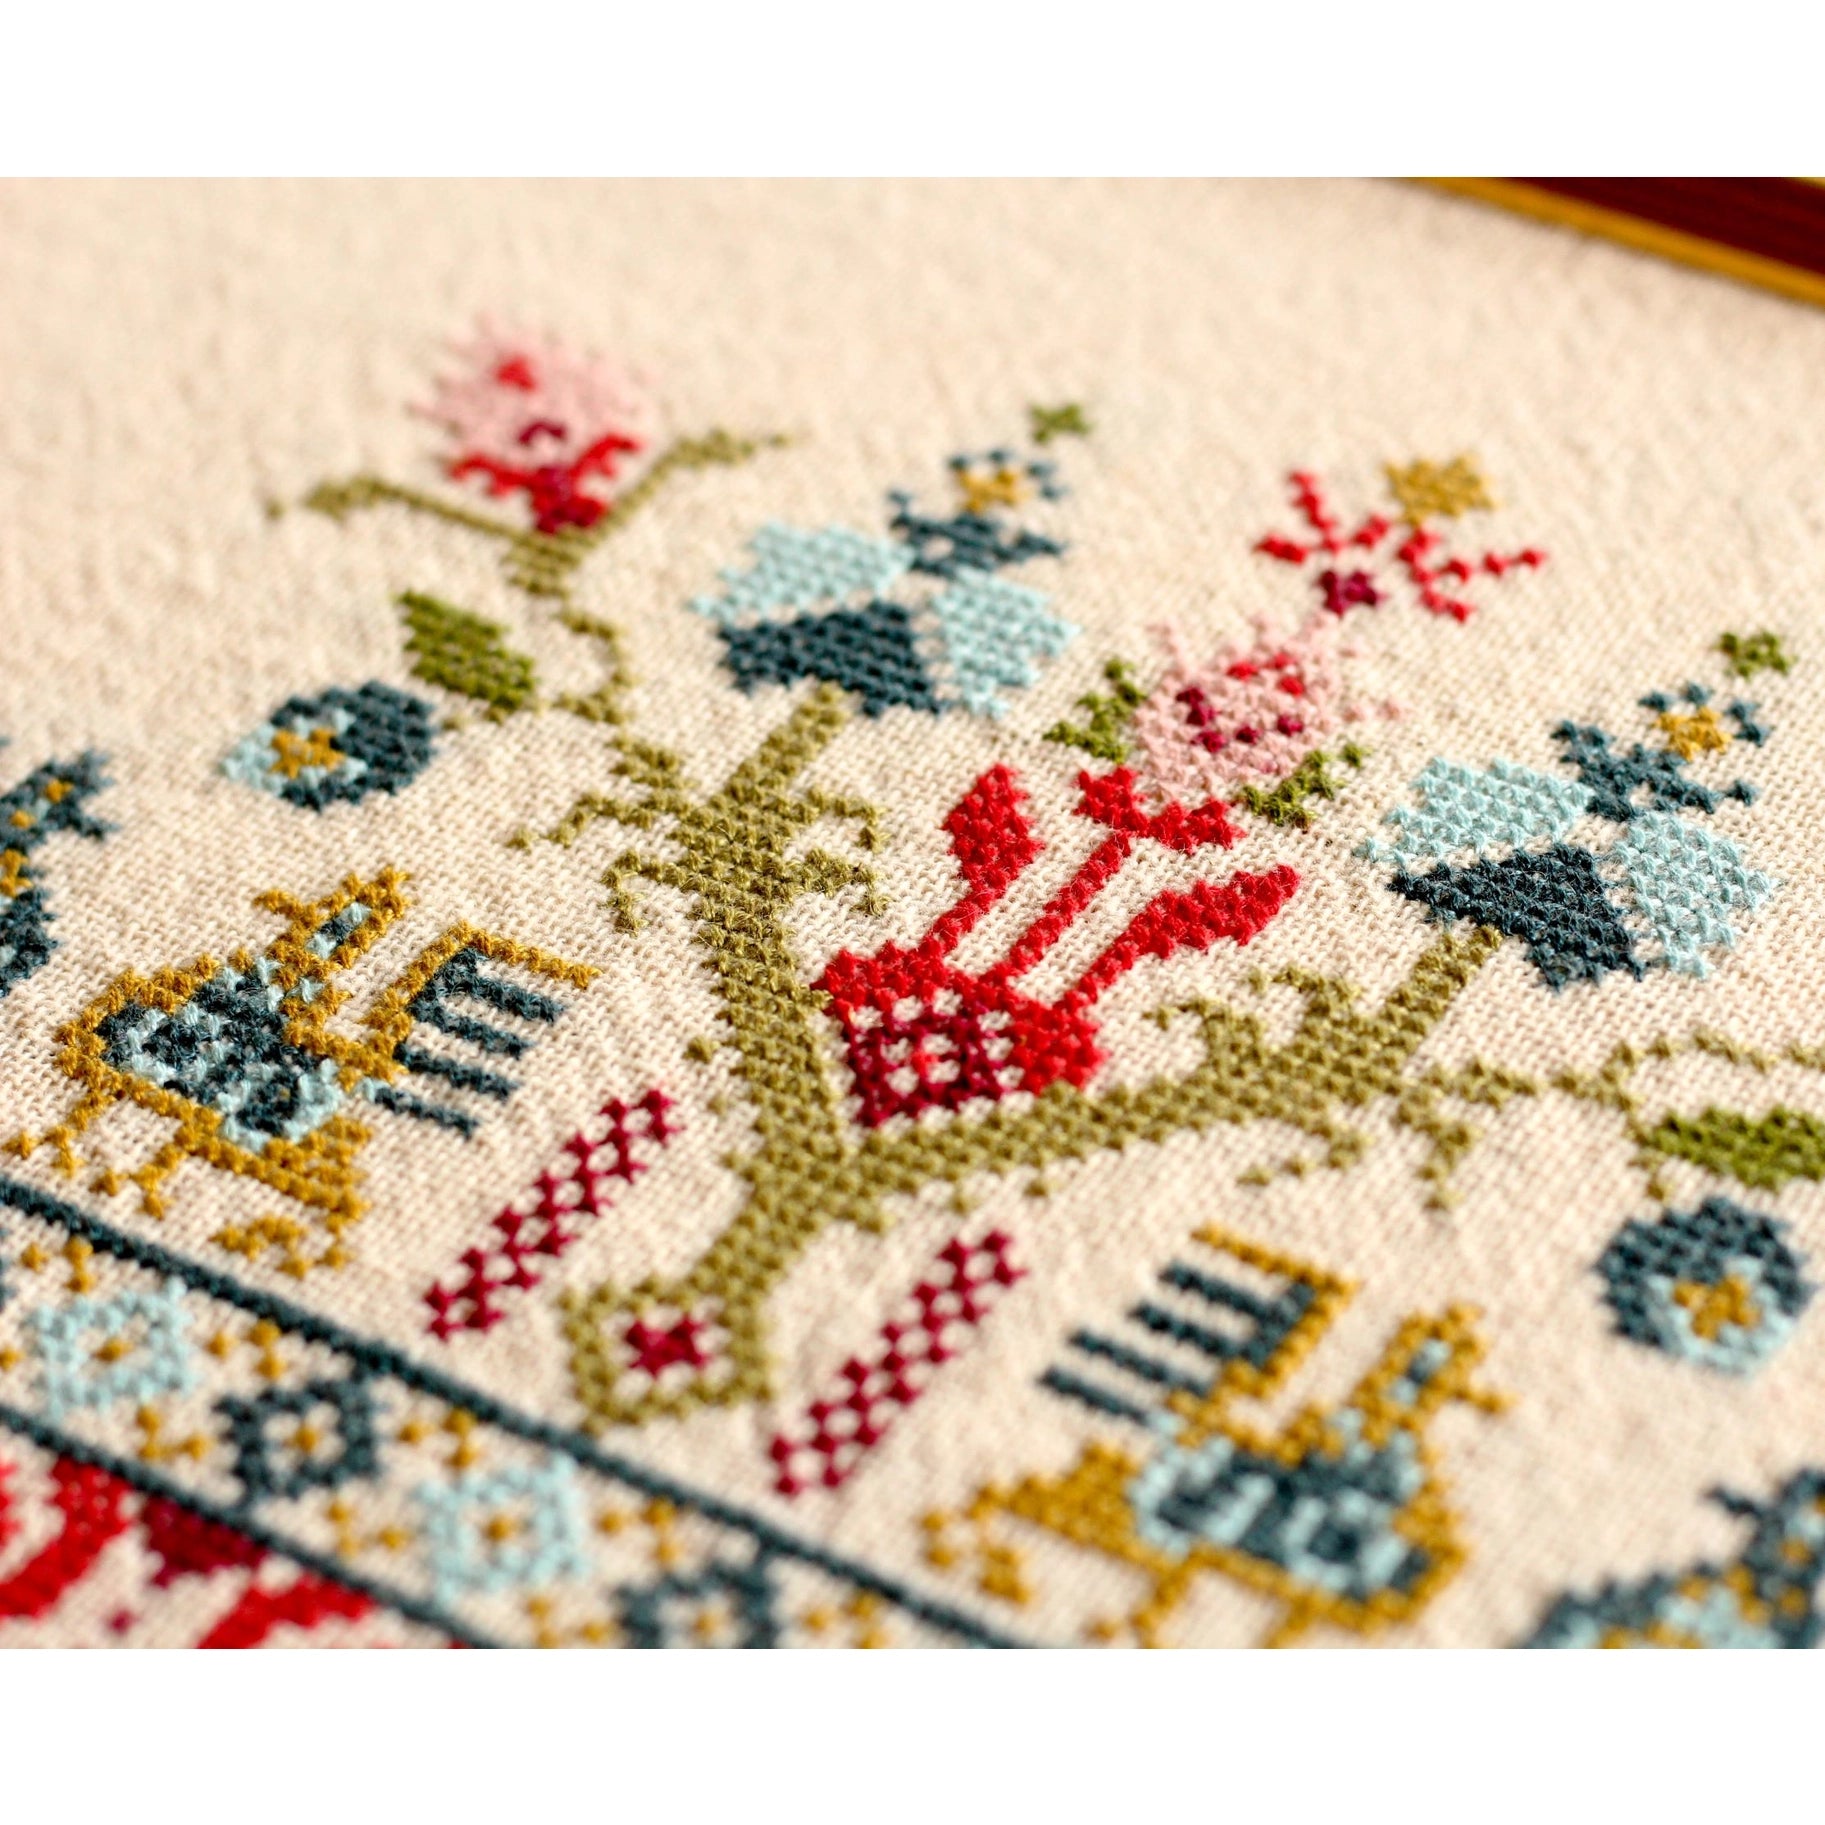 Pella Pouli Cross Stitch Kit - Avlea Folk Embroidery Kit